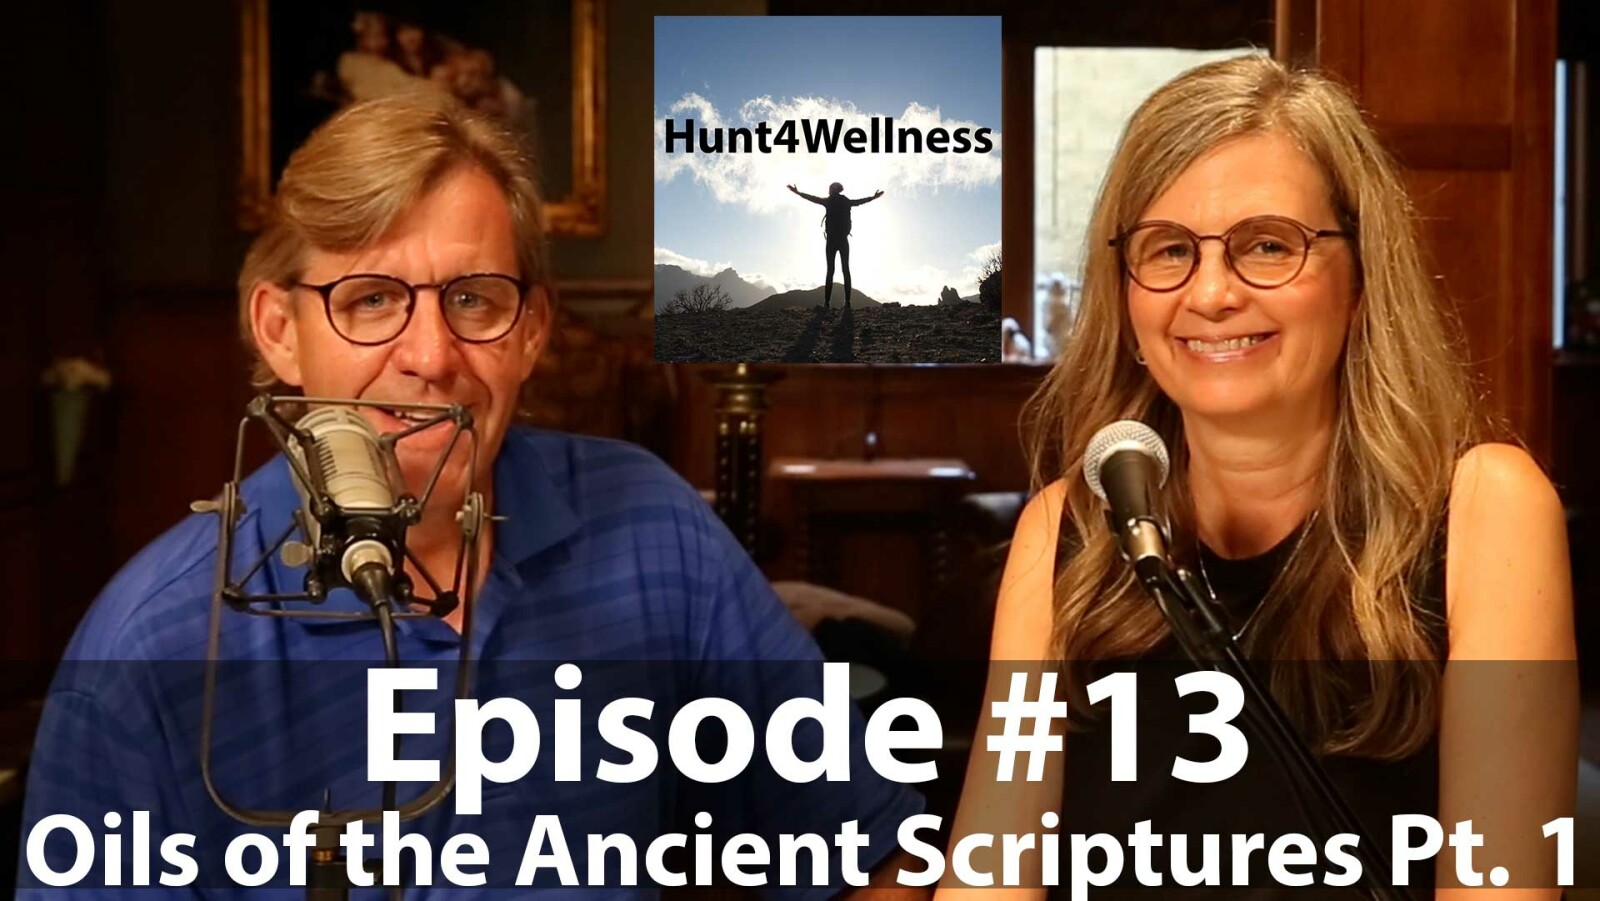 Episode #13 - Oils of the Ancient Scriptures Part 1